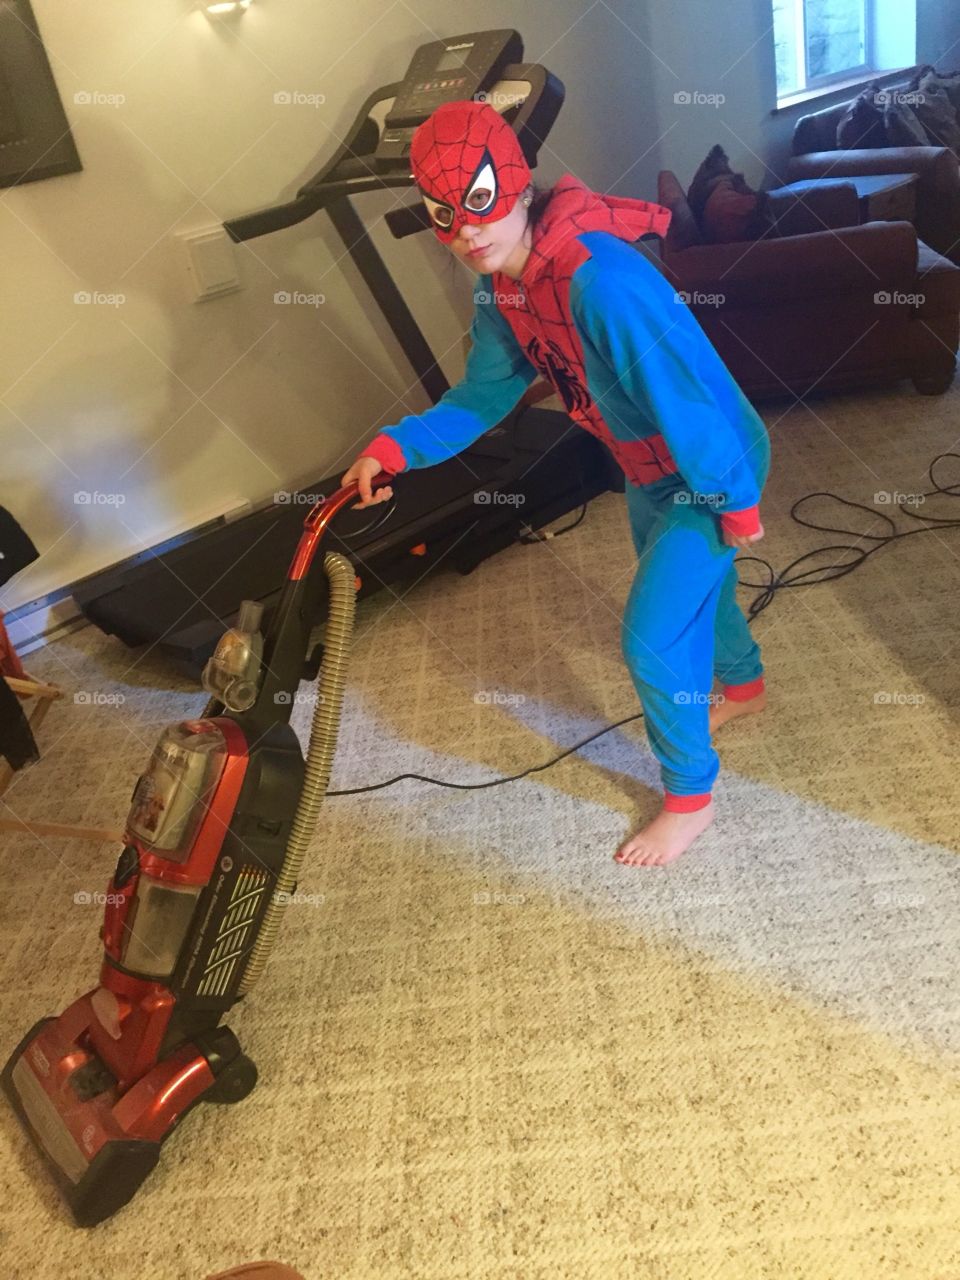 Spider-Man doing chores